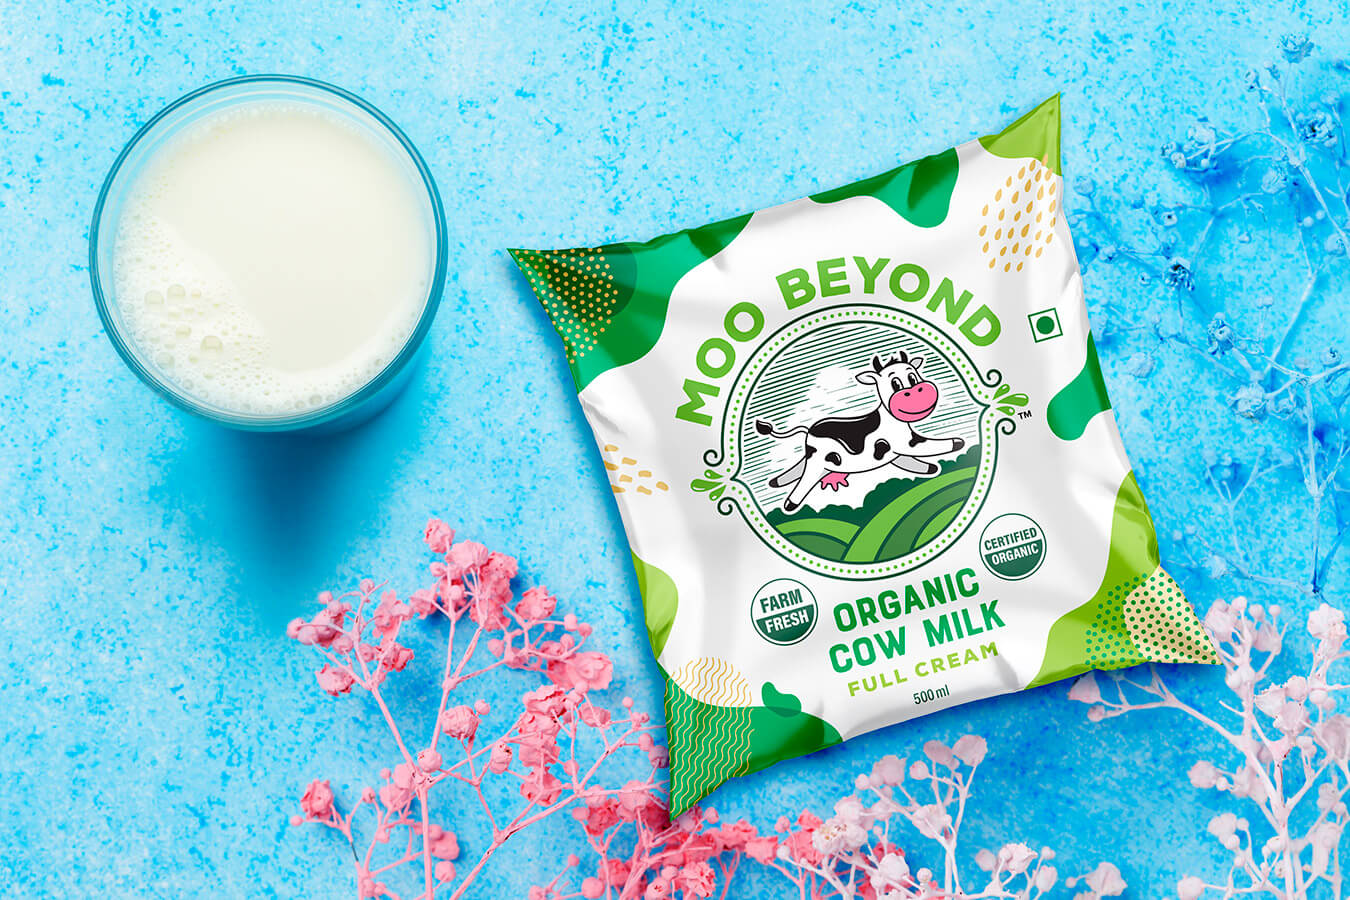 Moo Beyond - Organic Cow Milk (Full Cream) 500ml